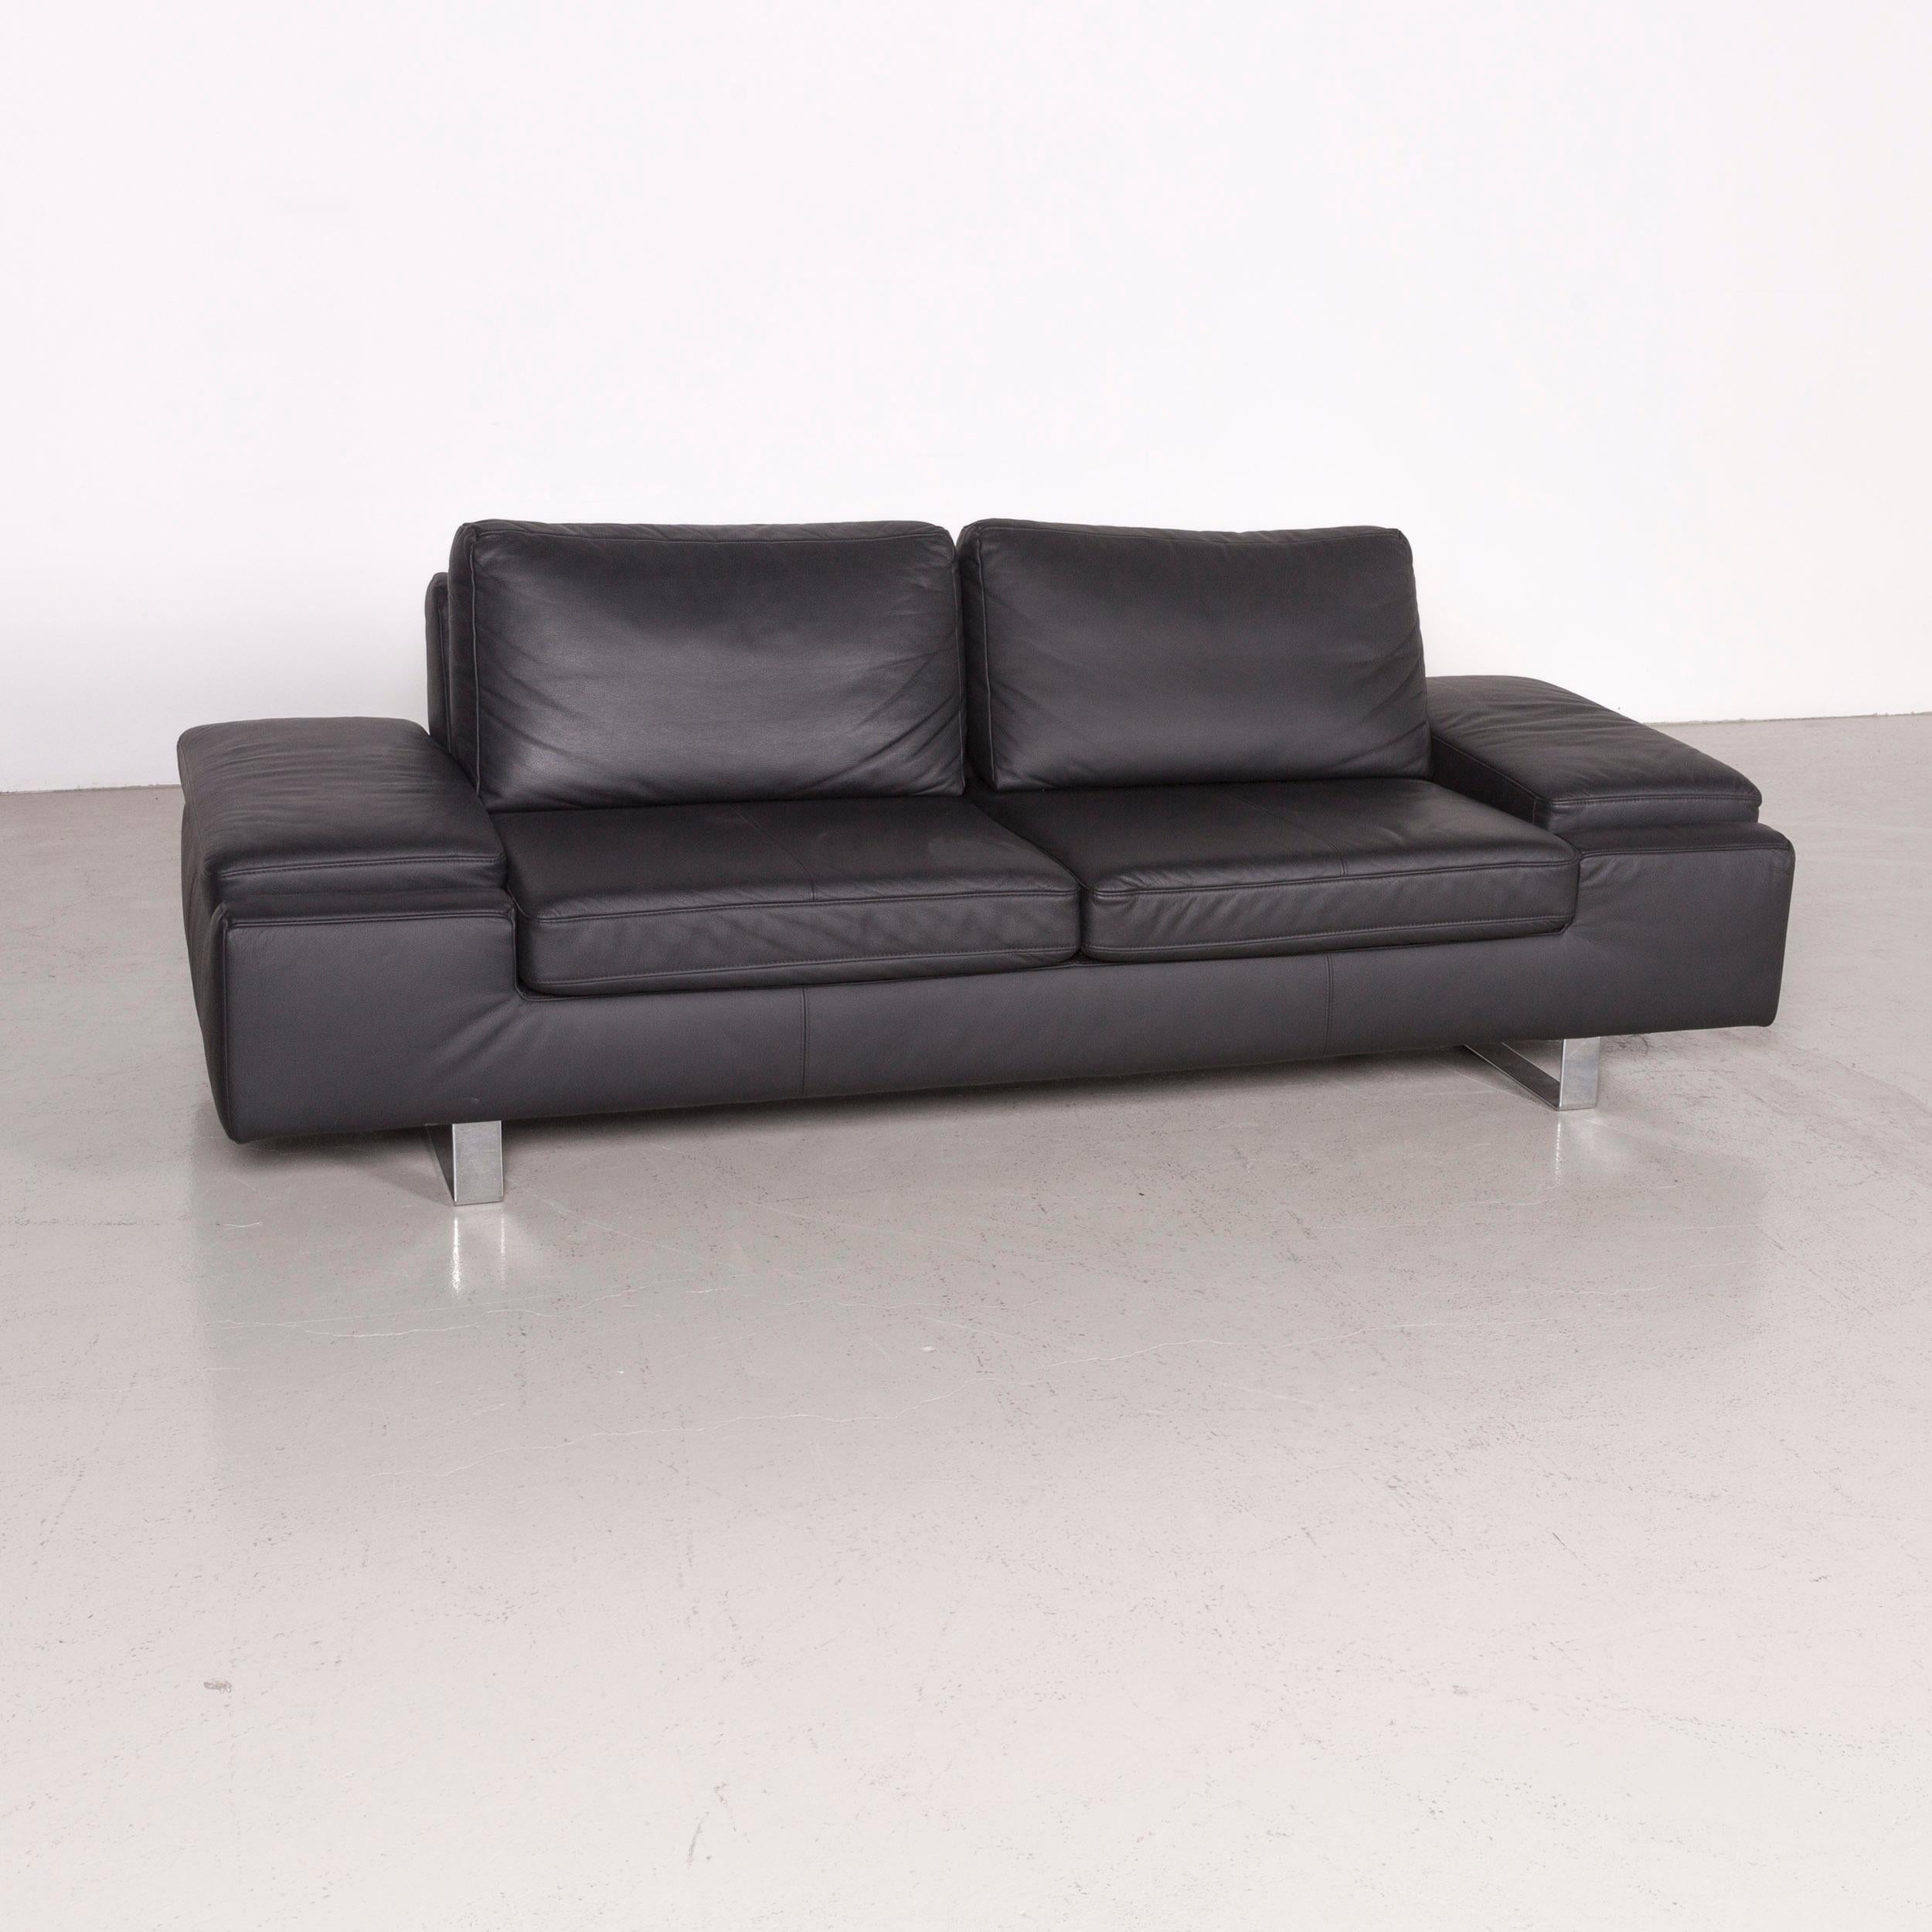 German Arte M Designer Leather Sofa Black Three-Seat Couch Modern For Sale